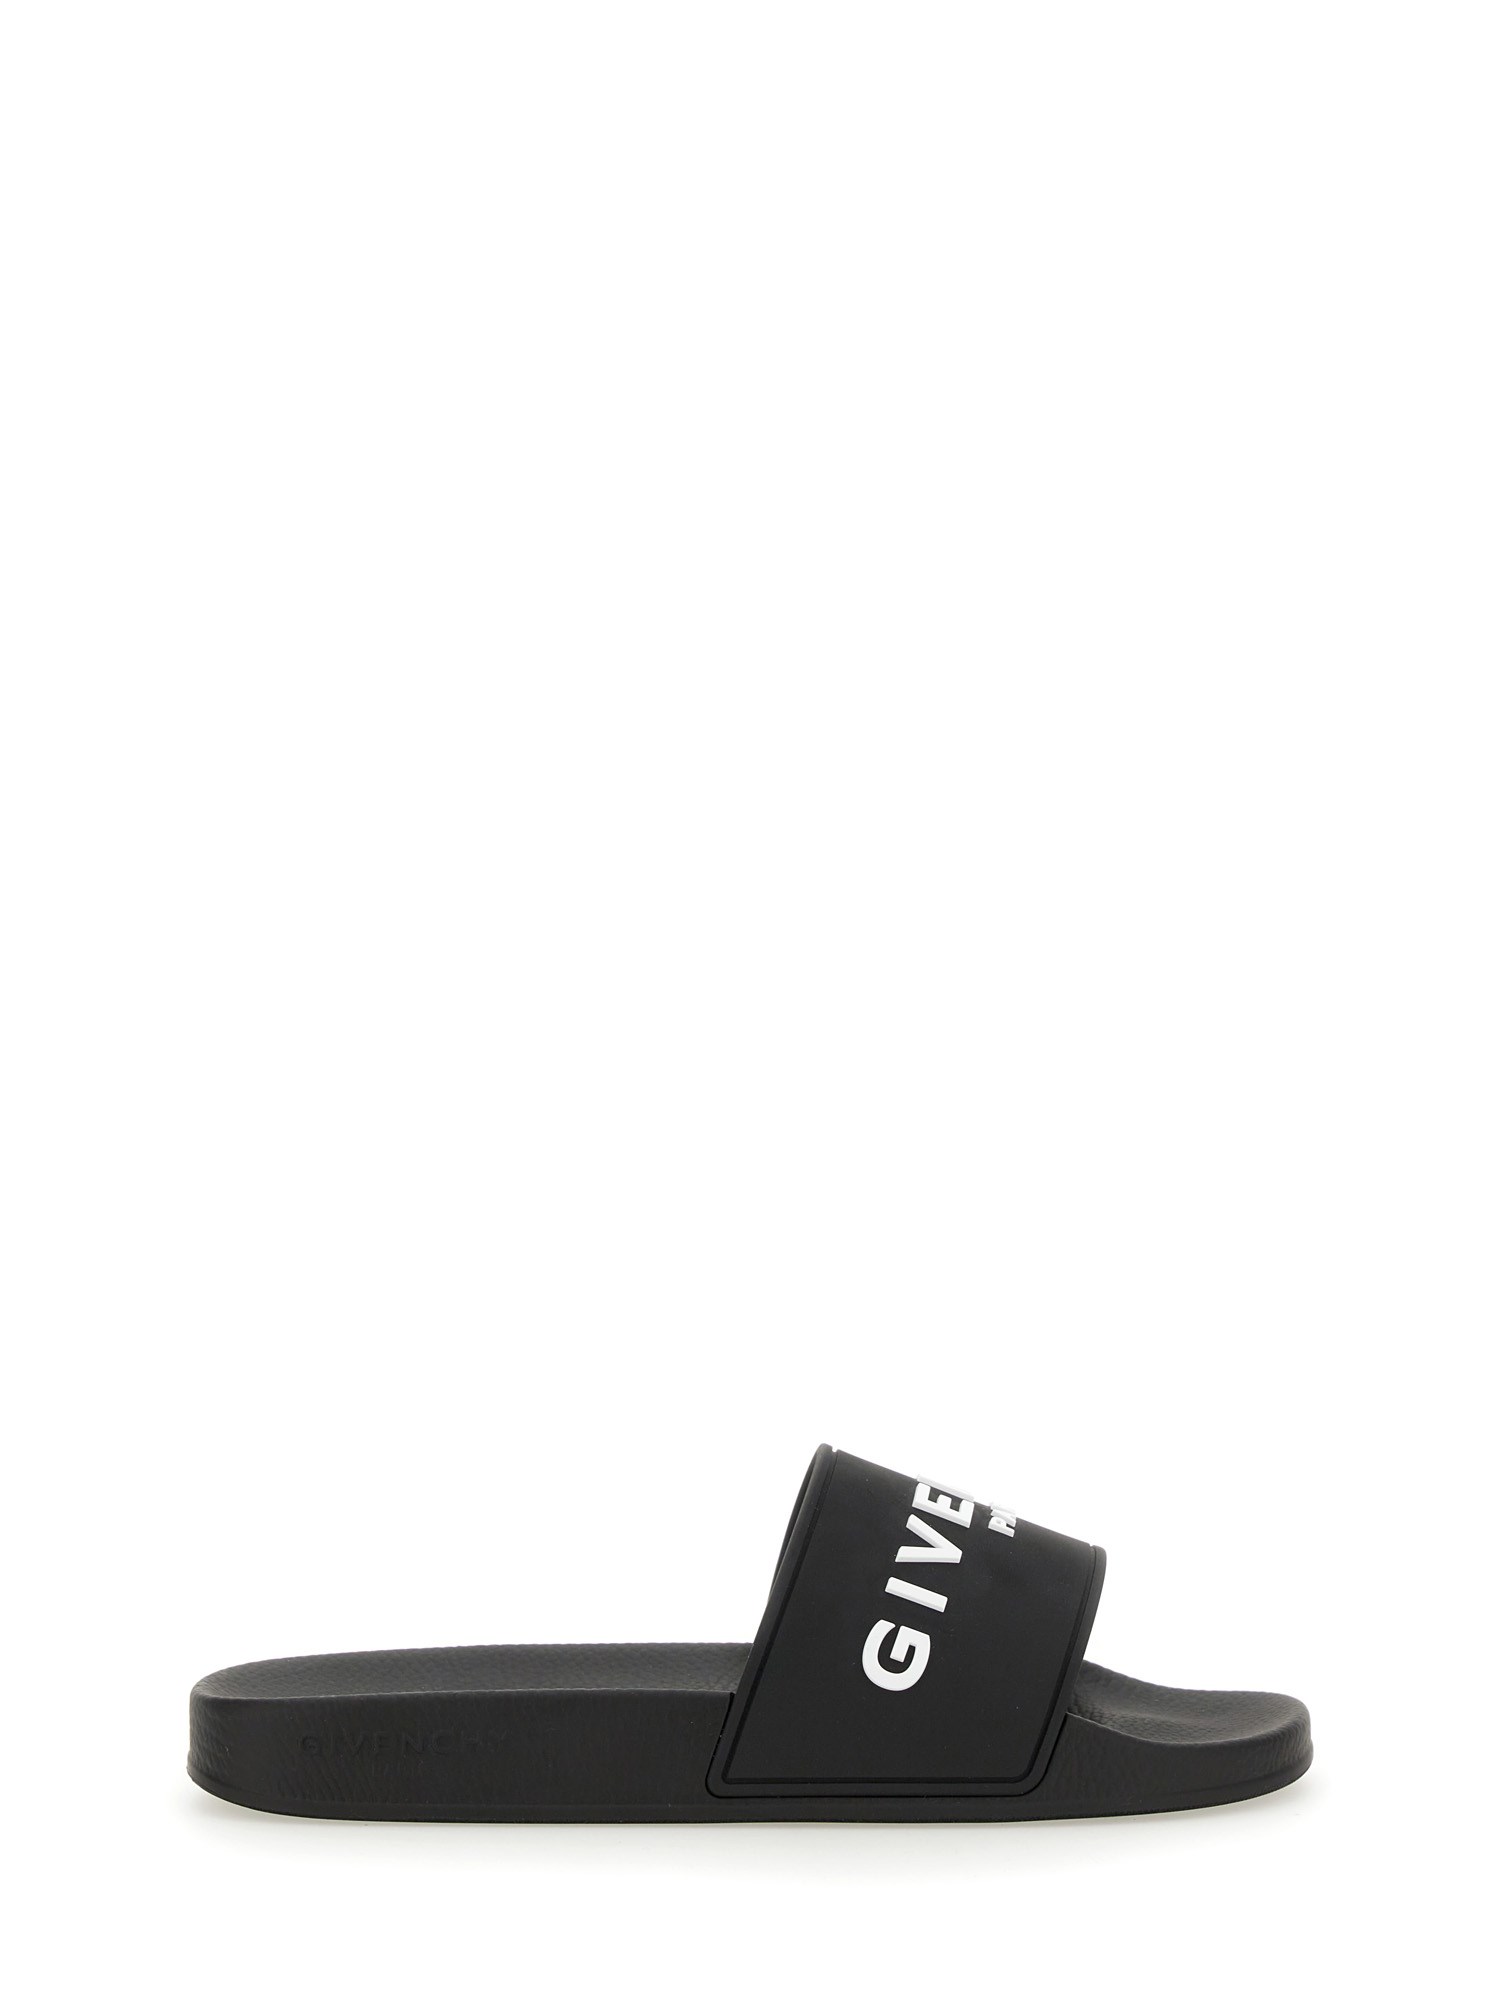 givenchy slide sandal with logo